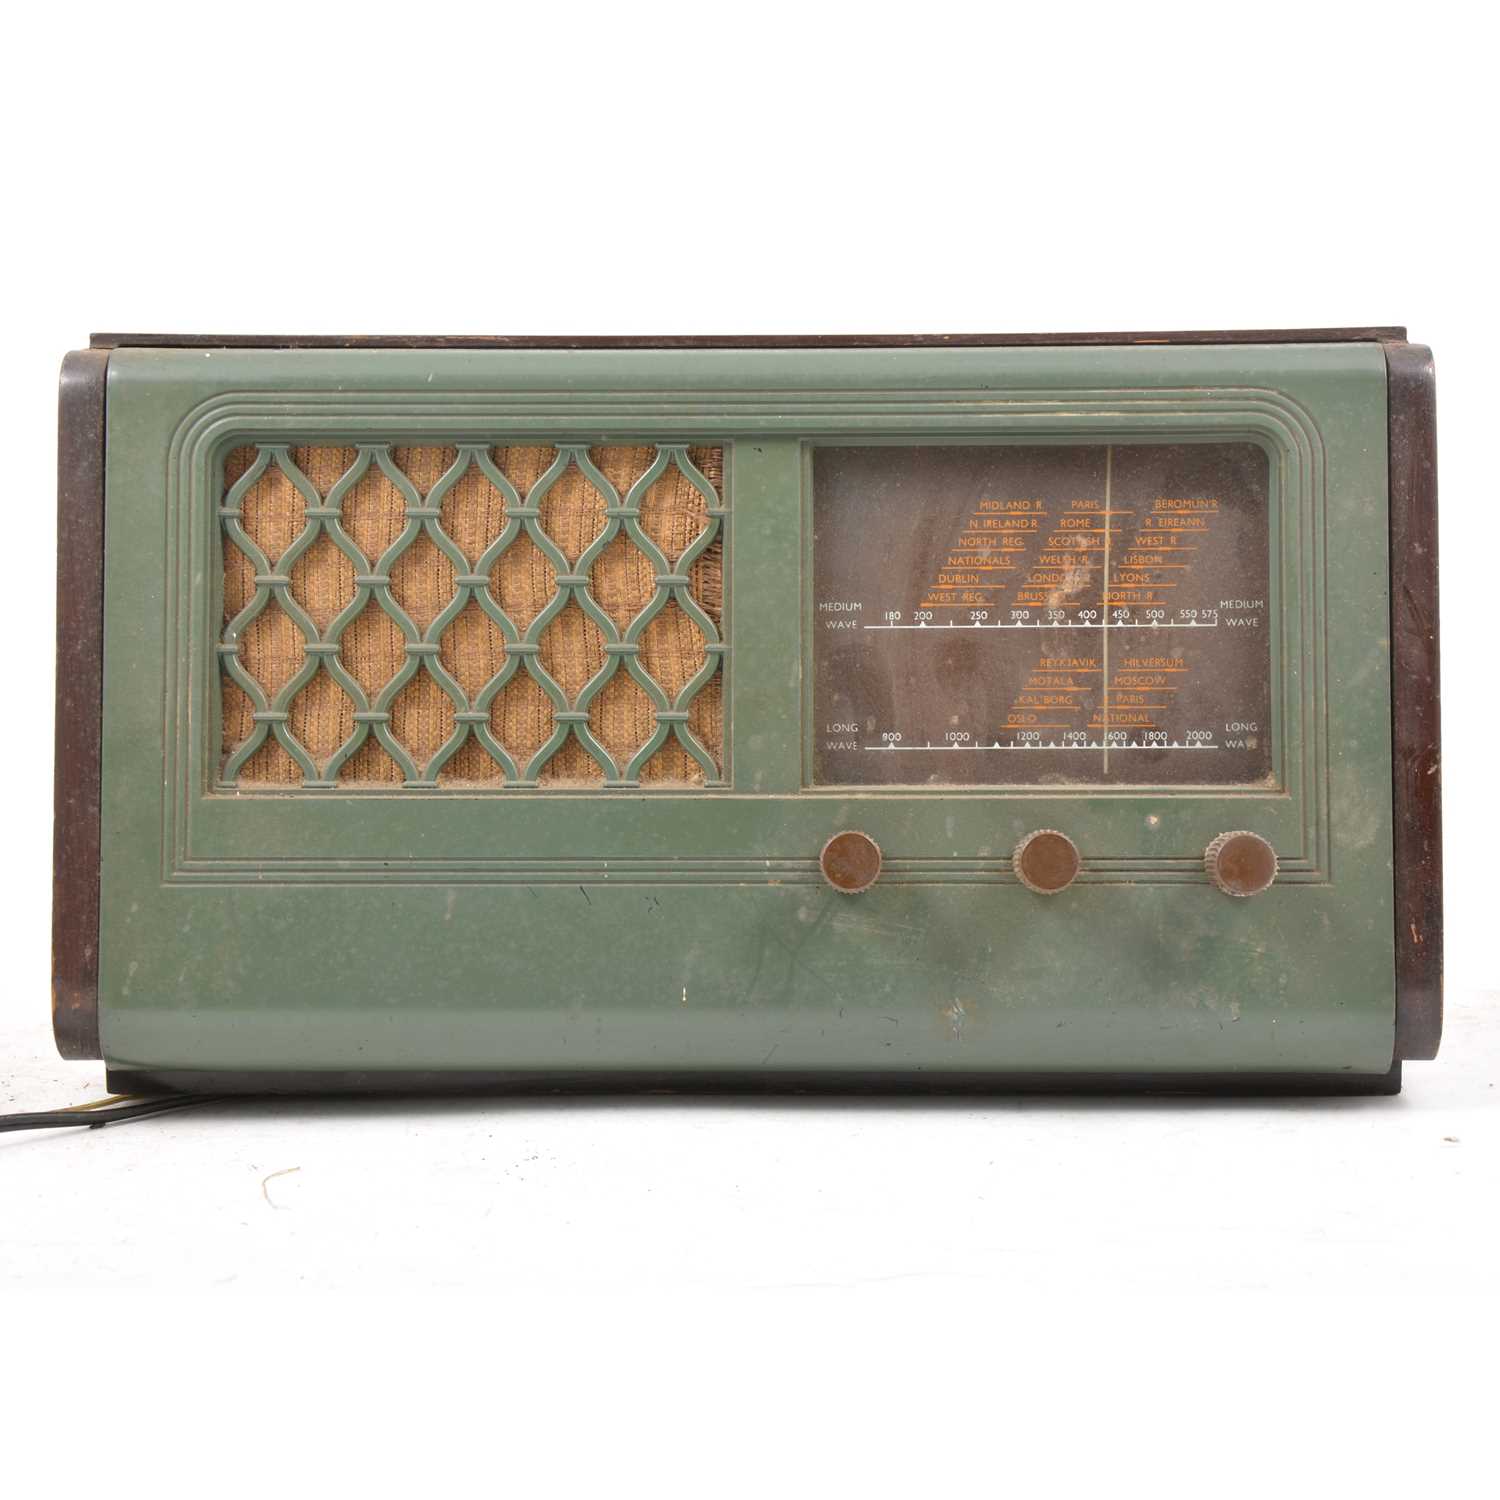 Lot 109 - HMV vintage valve radio, Model 1115.